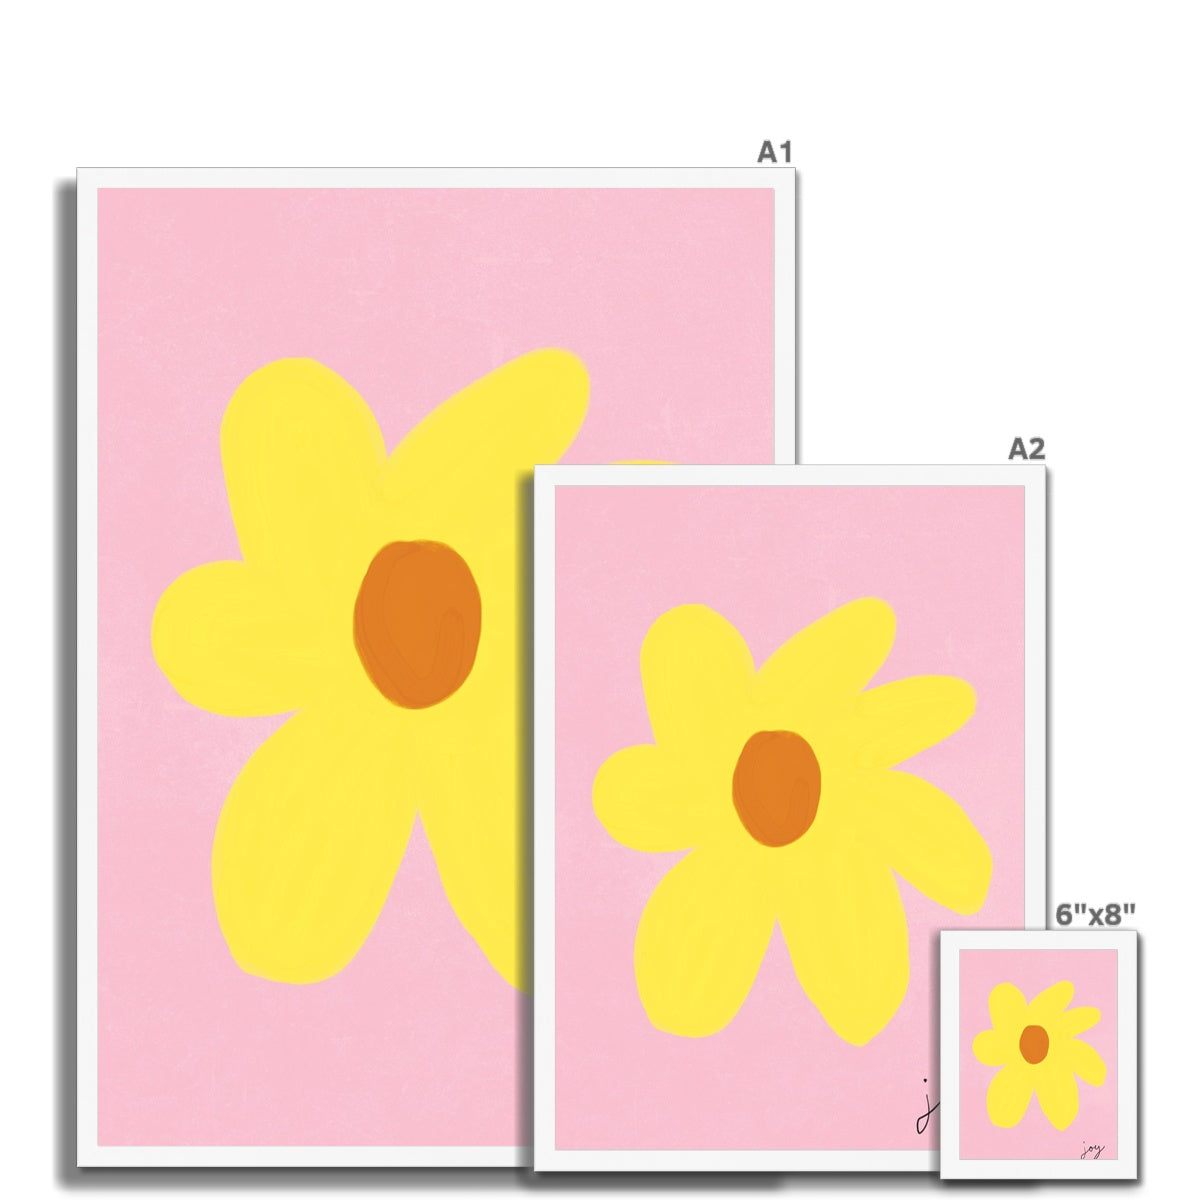 Joy Flower Print - Pink, Yellow, Brown Framed Print